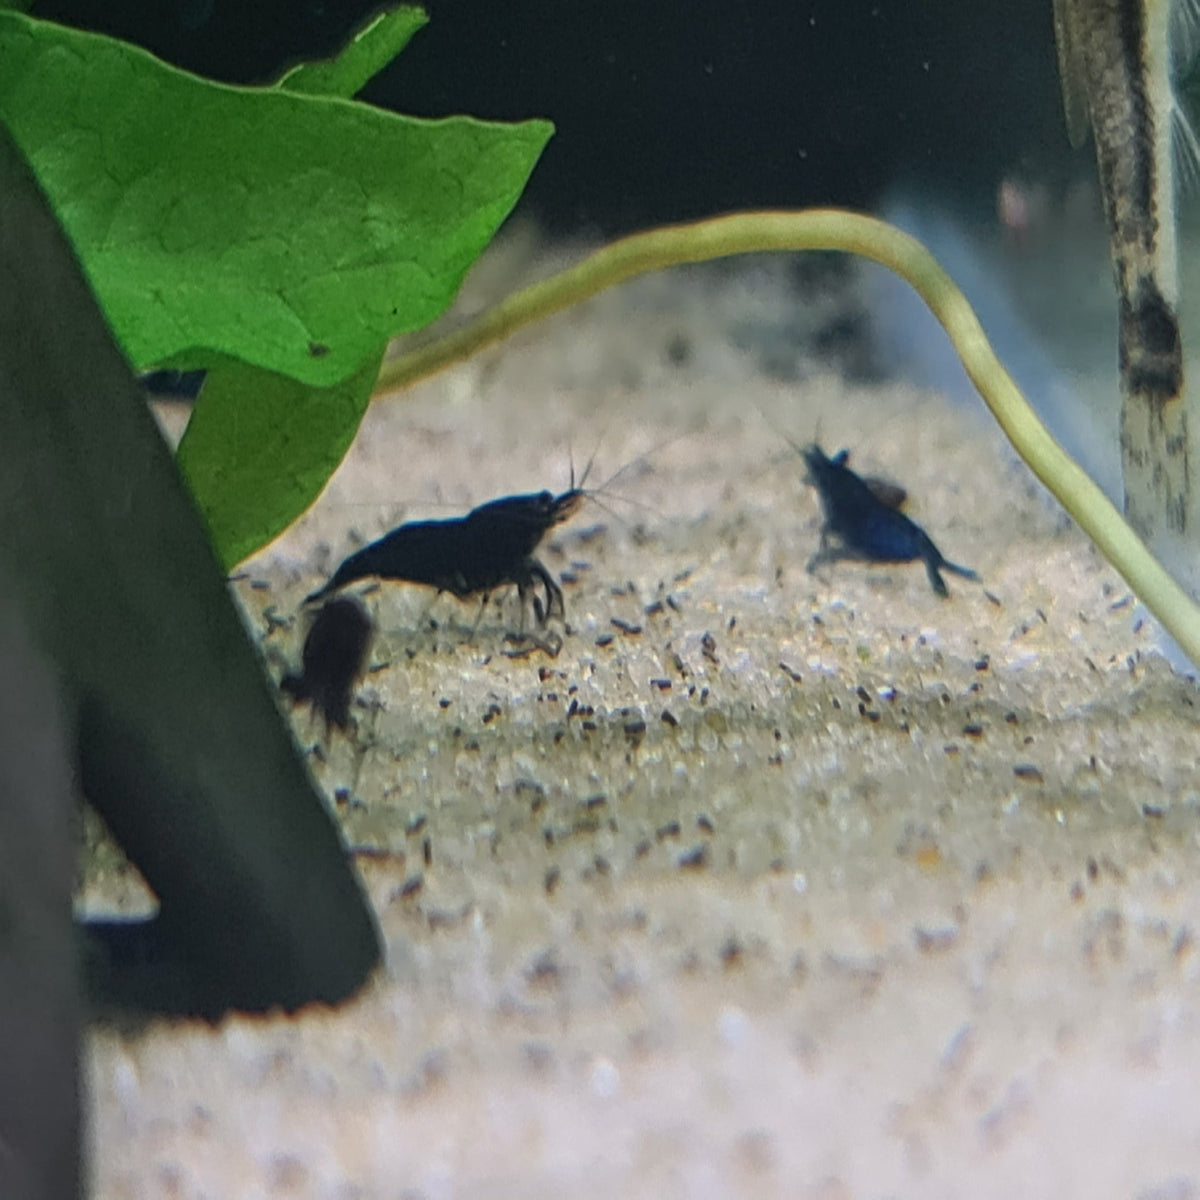 Blue Dream Cherry Shrimp - Nano Tanks Australia Aquarium Shop